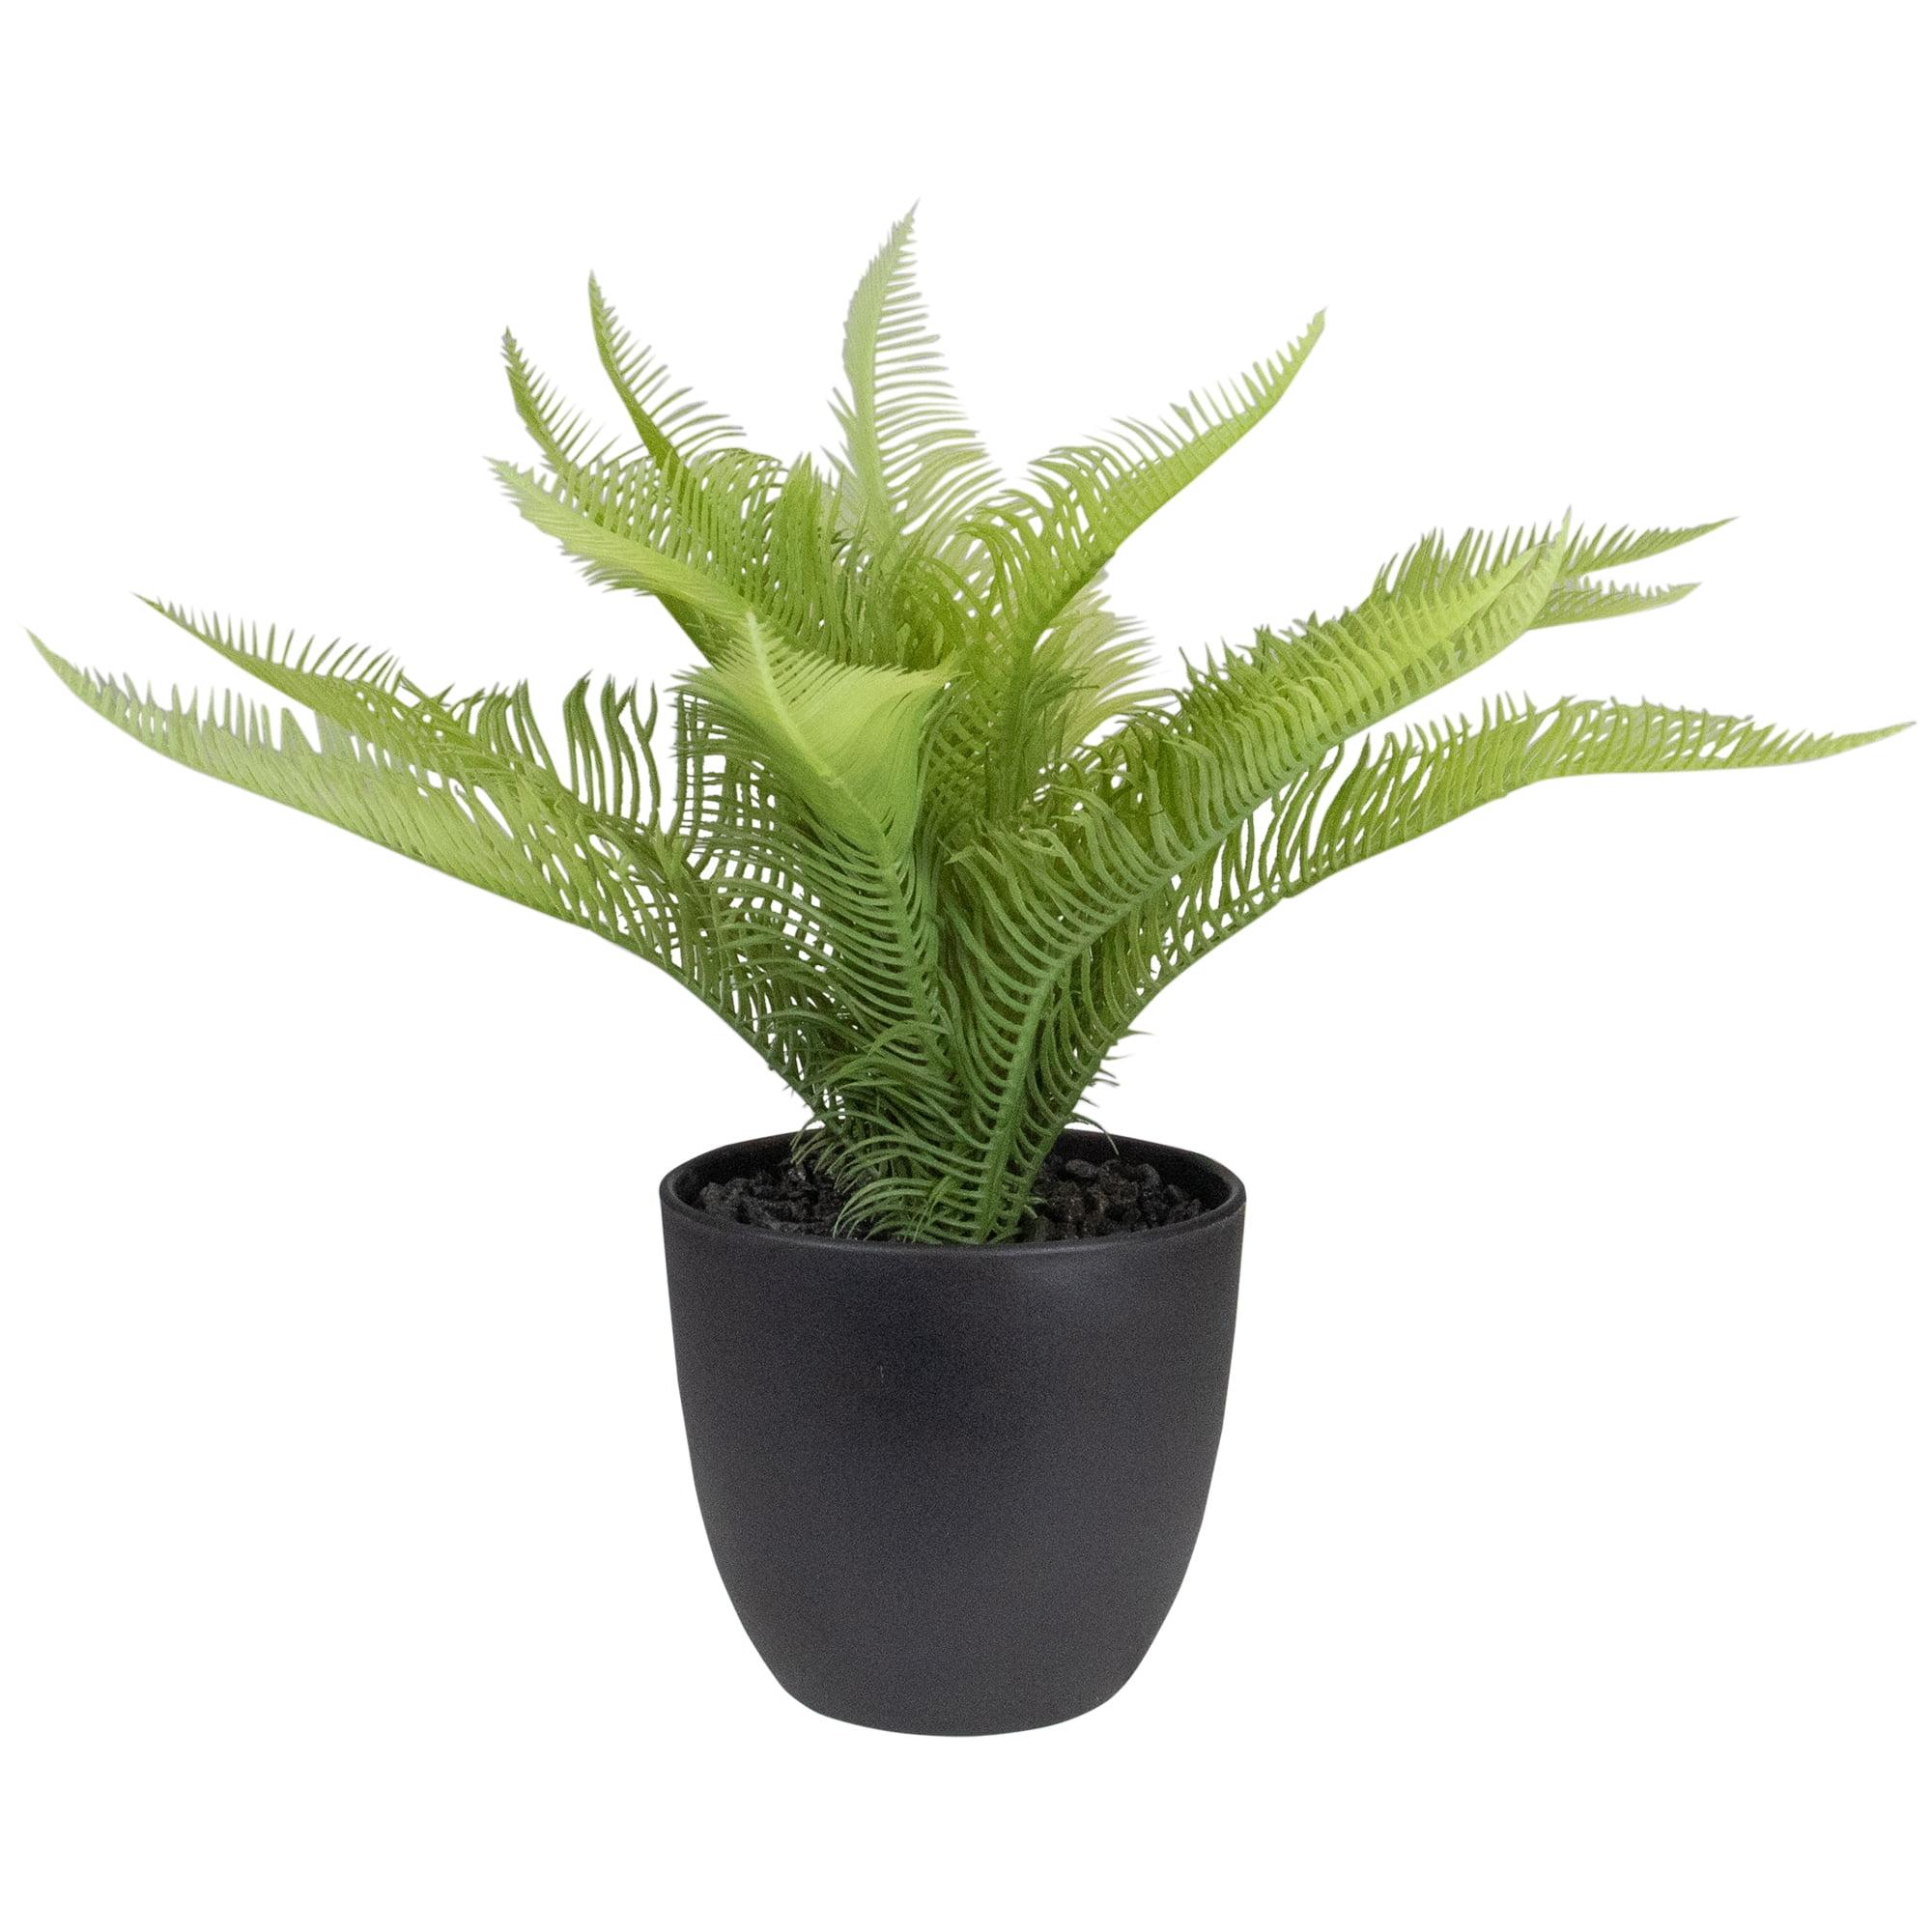 Evergreen Bliss 12" Artificial Pinus in Black Pot for Indoor/Outdoor Decor